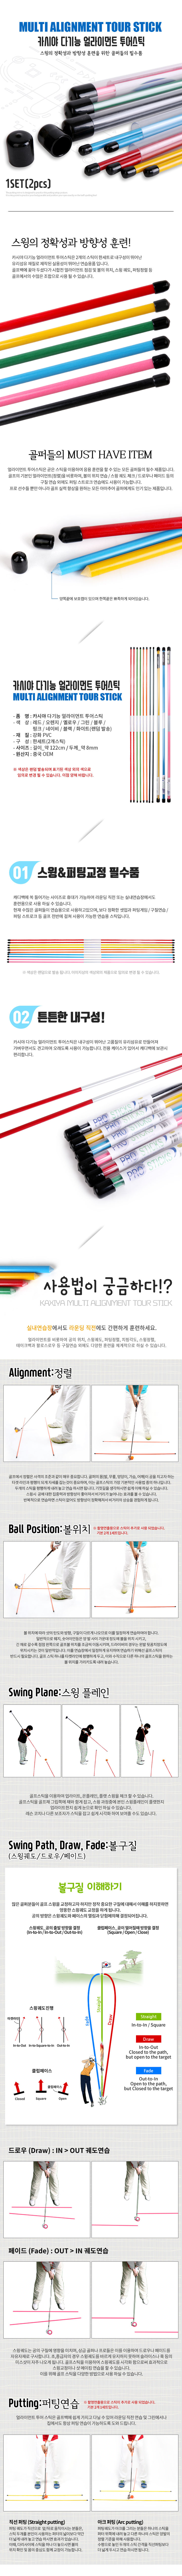 alignment_stick.jpg